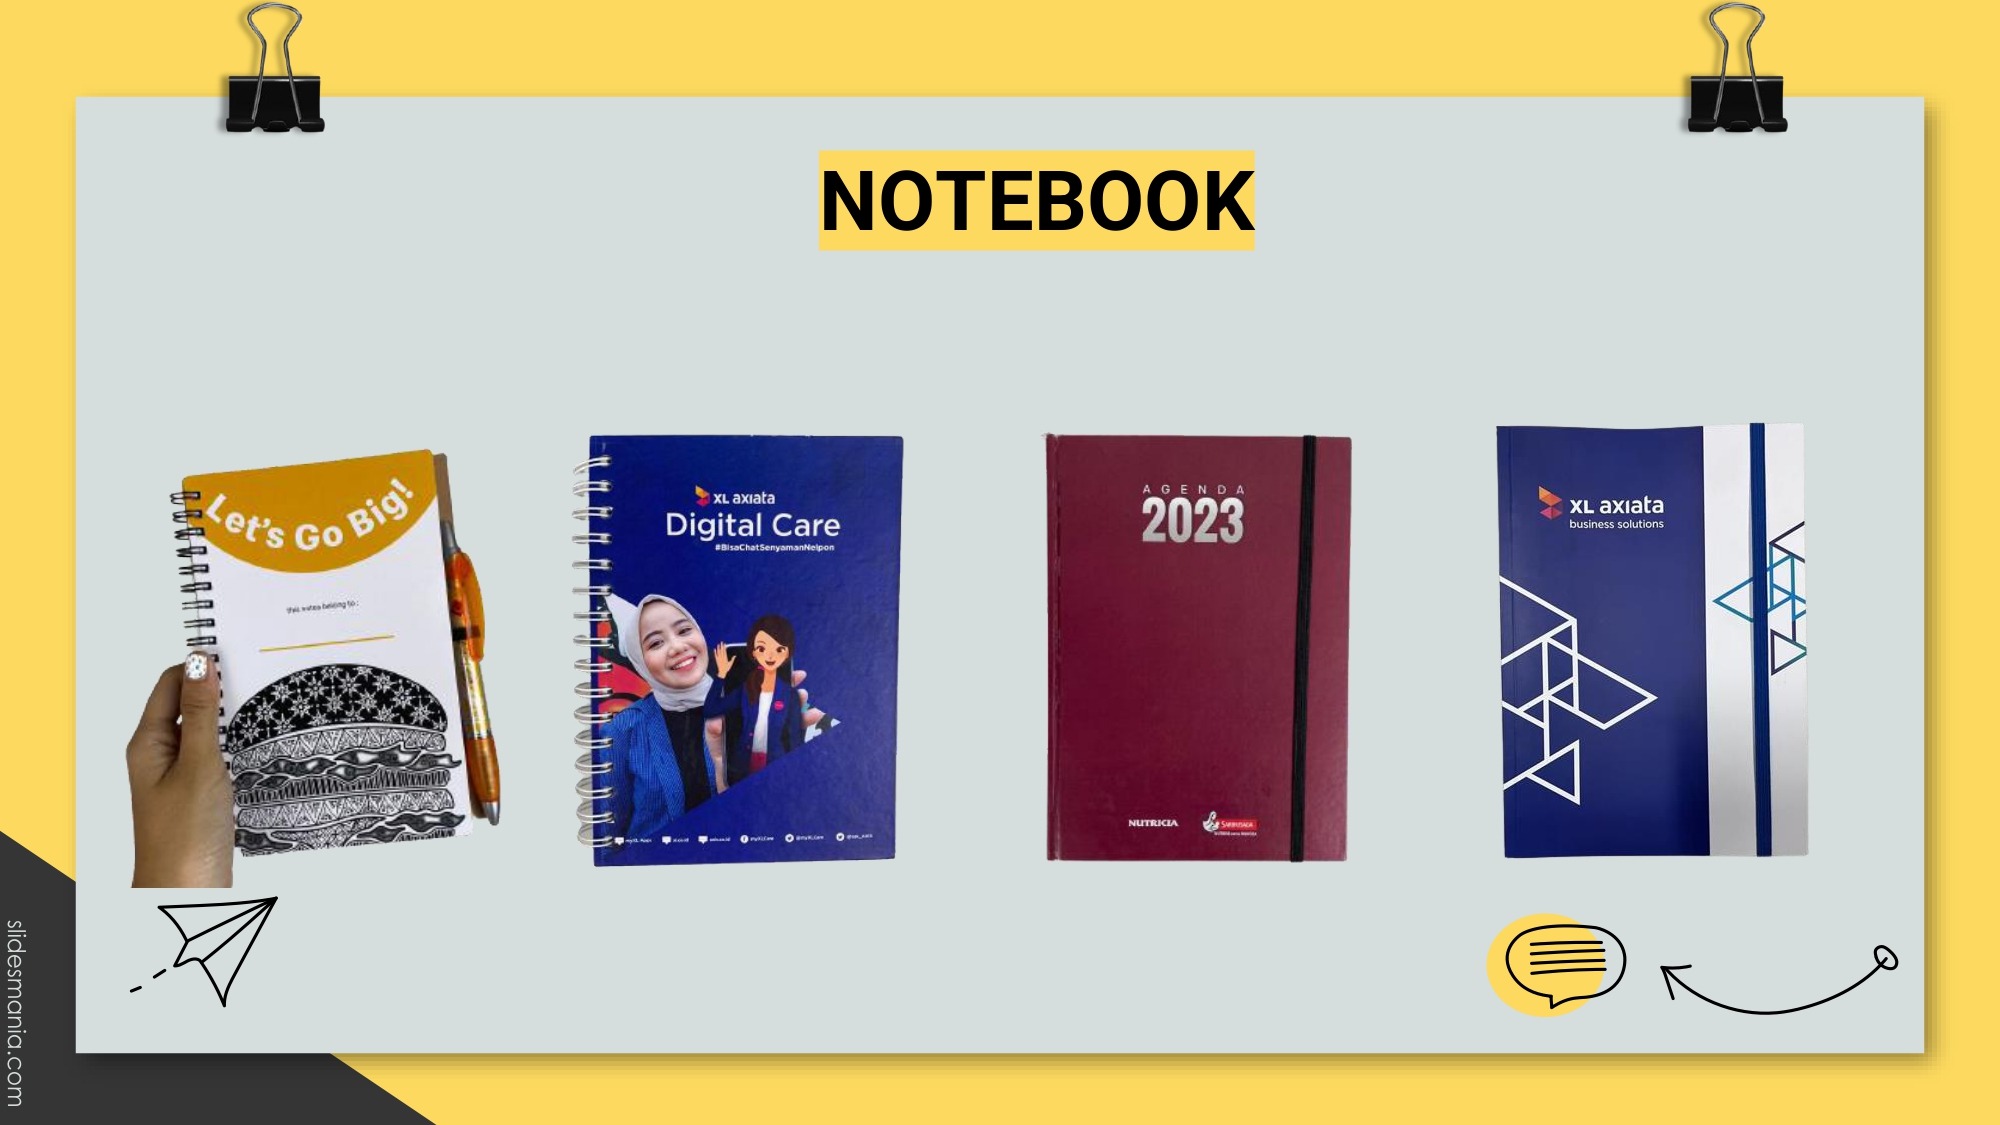 gambar notebook